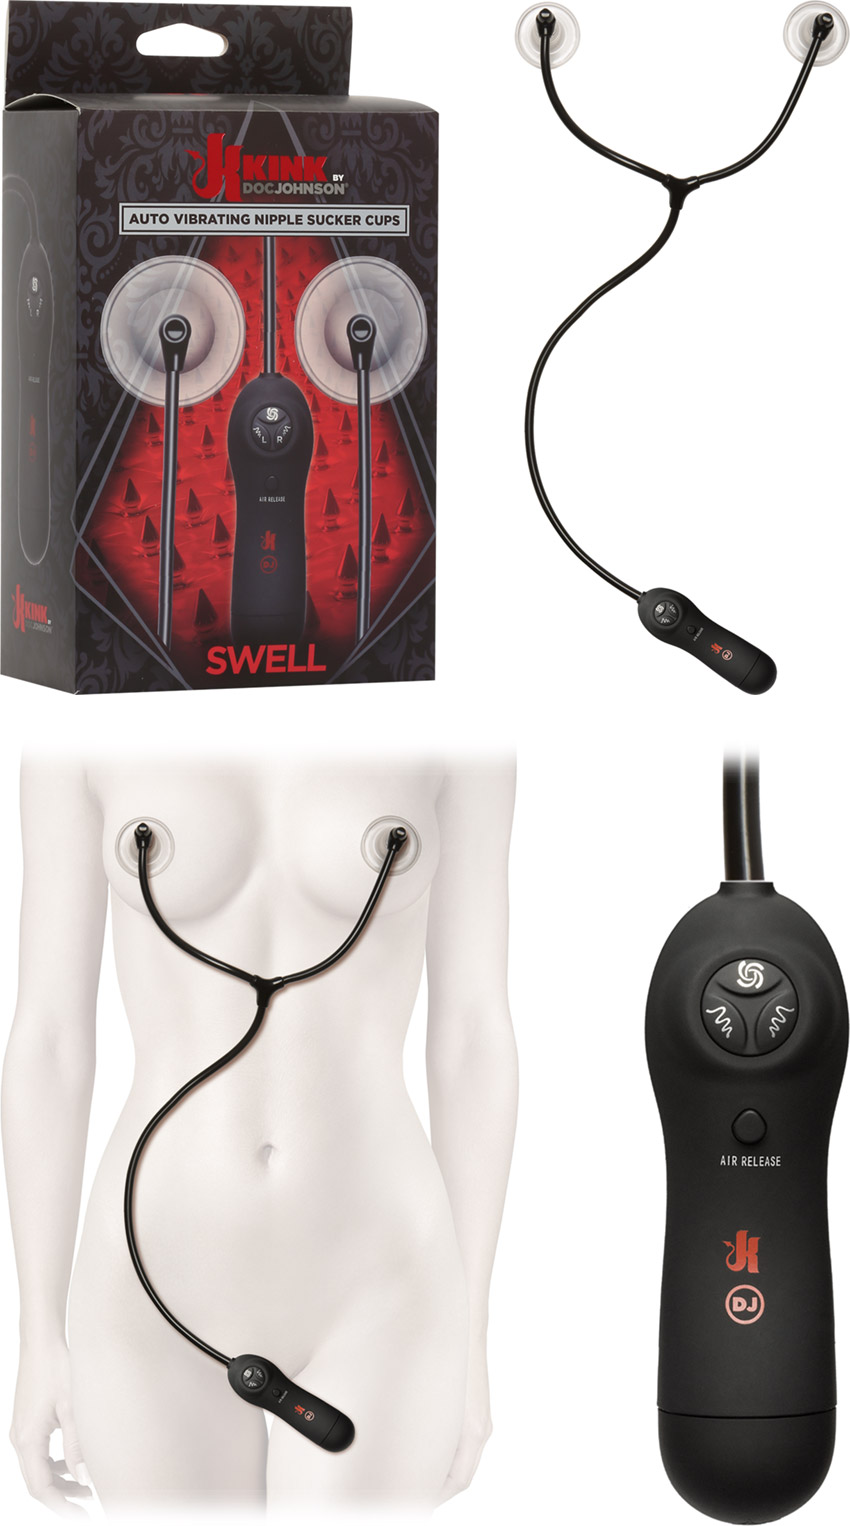 Doc Johnson Kink Swell vibrating and automatic nipple aspirators